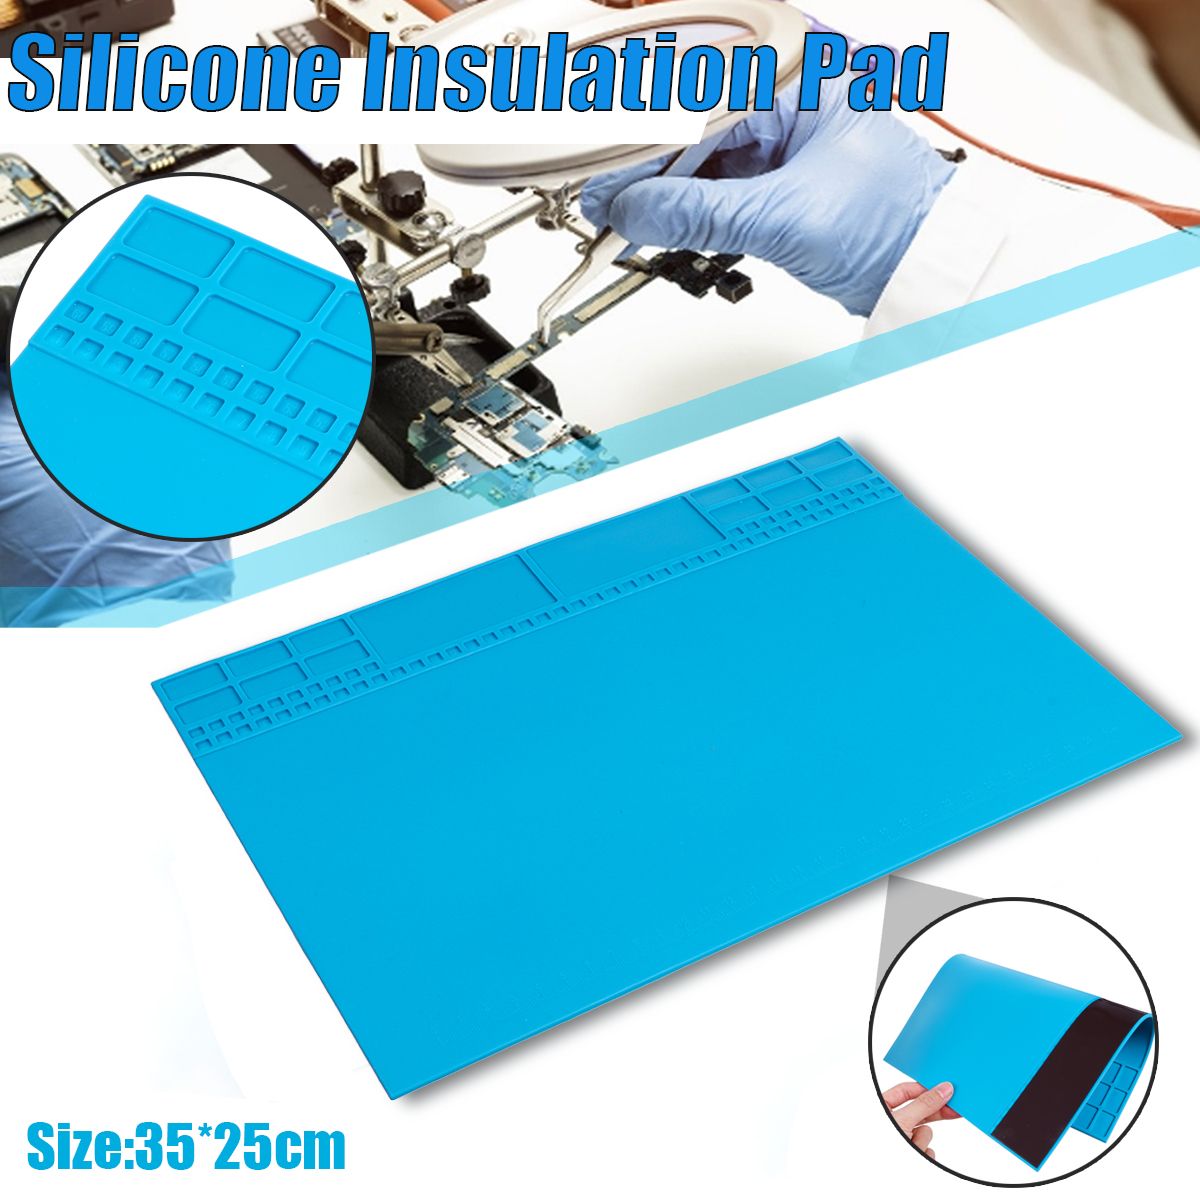 Phone-Maintenance-Insulation-Pad-Silicone-Pad-High-Temperature-Pad-1739706